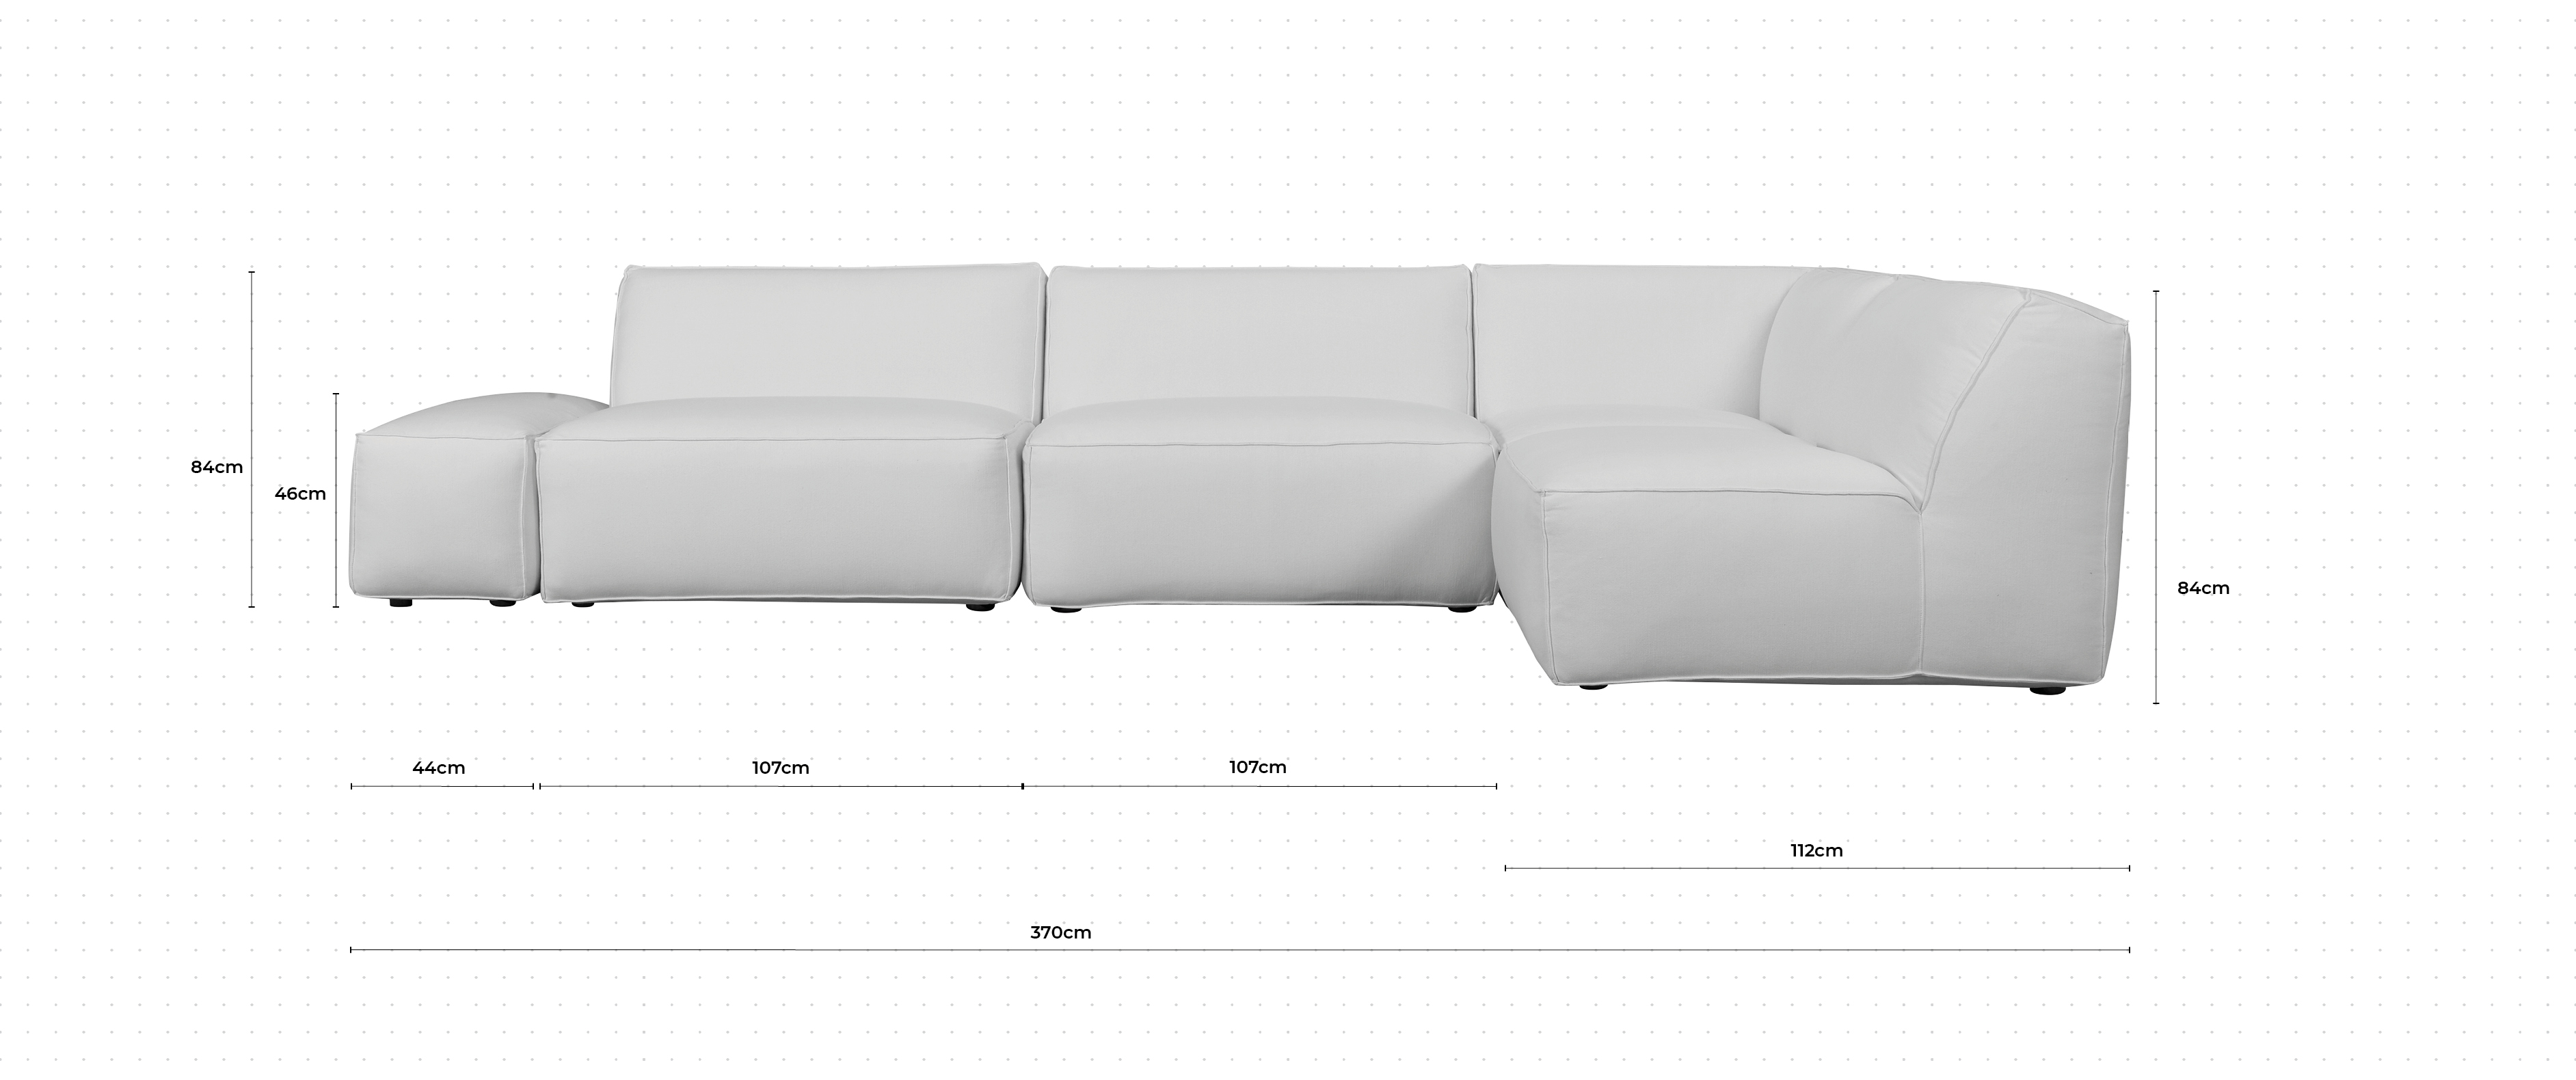 Cape Corner sofa RHF dimensions